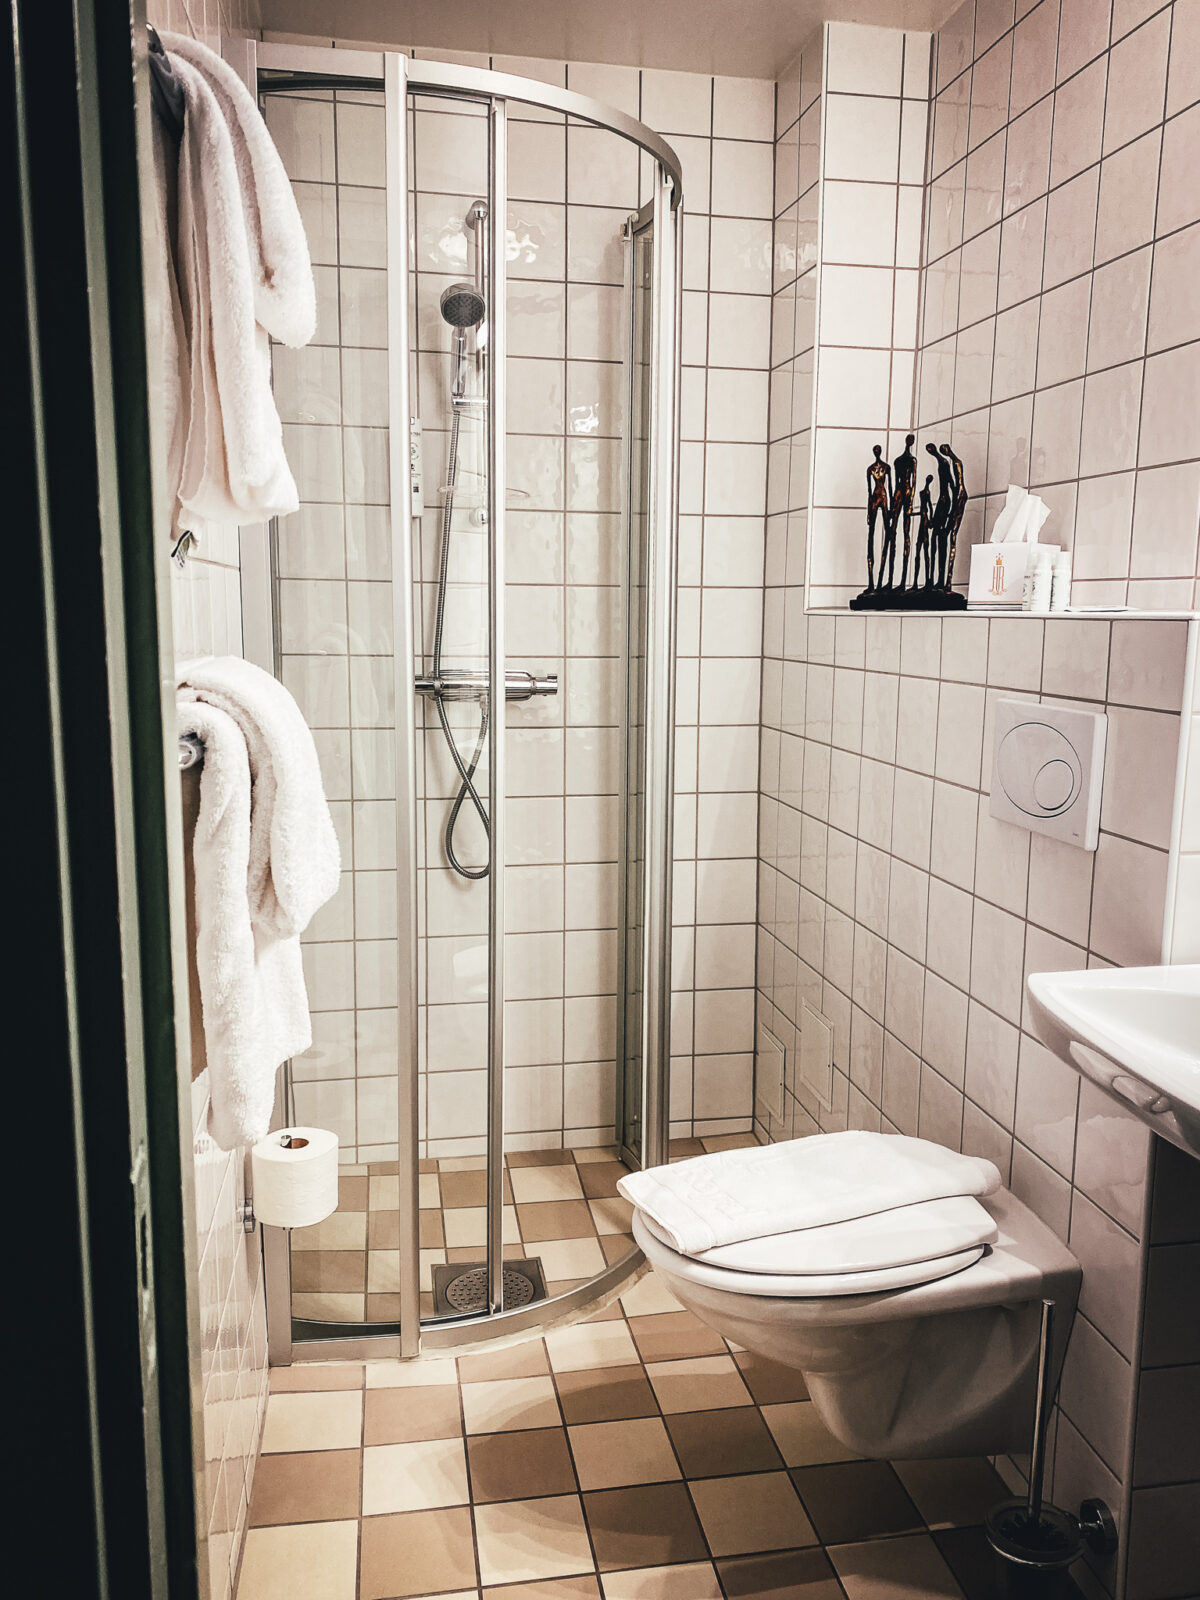 hotel royal Göteborg recension